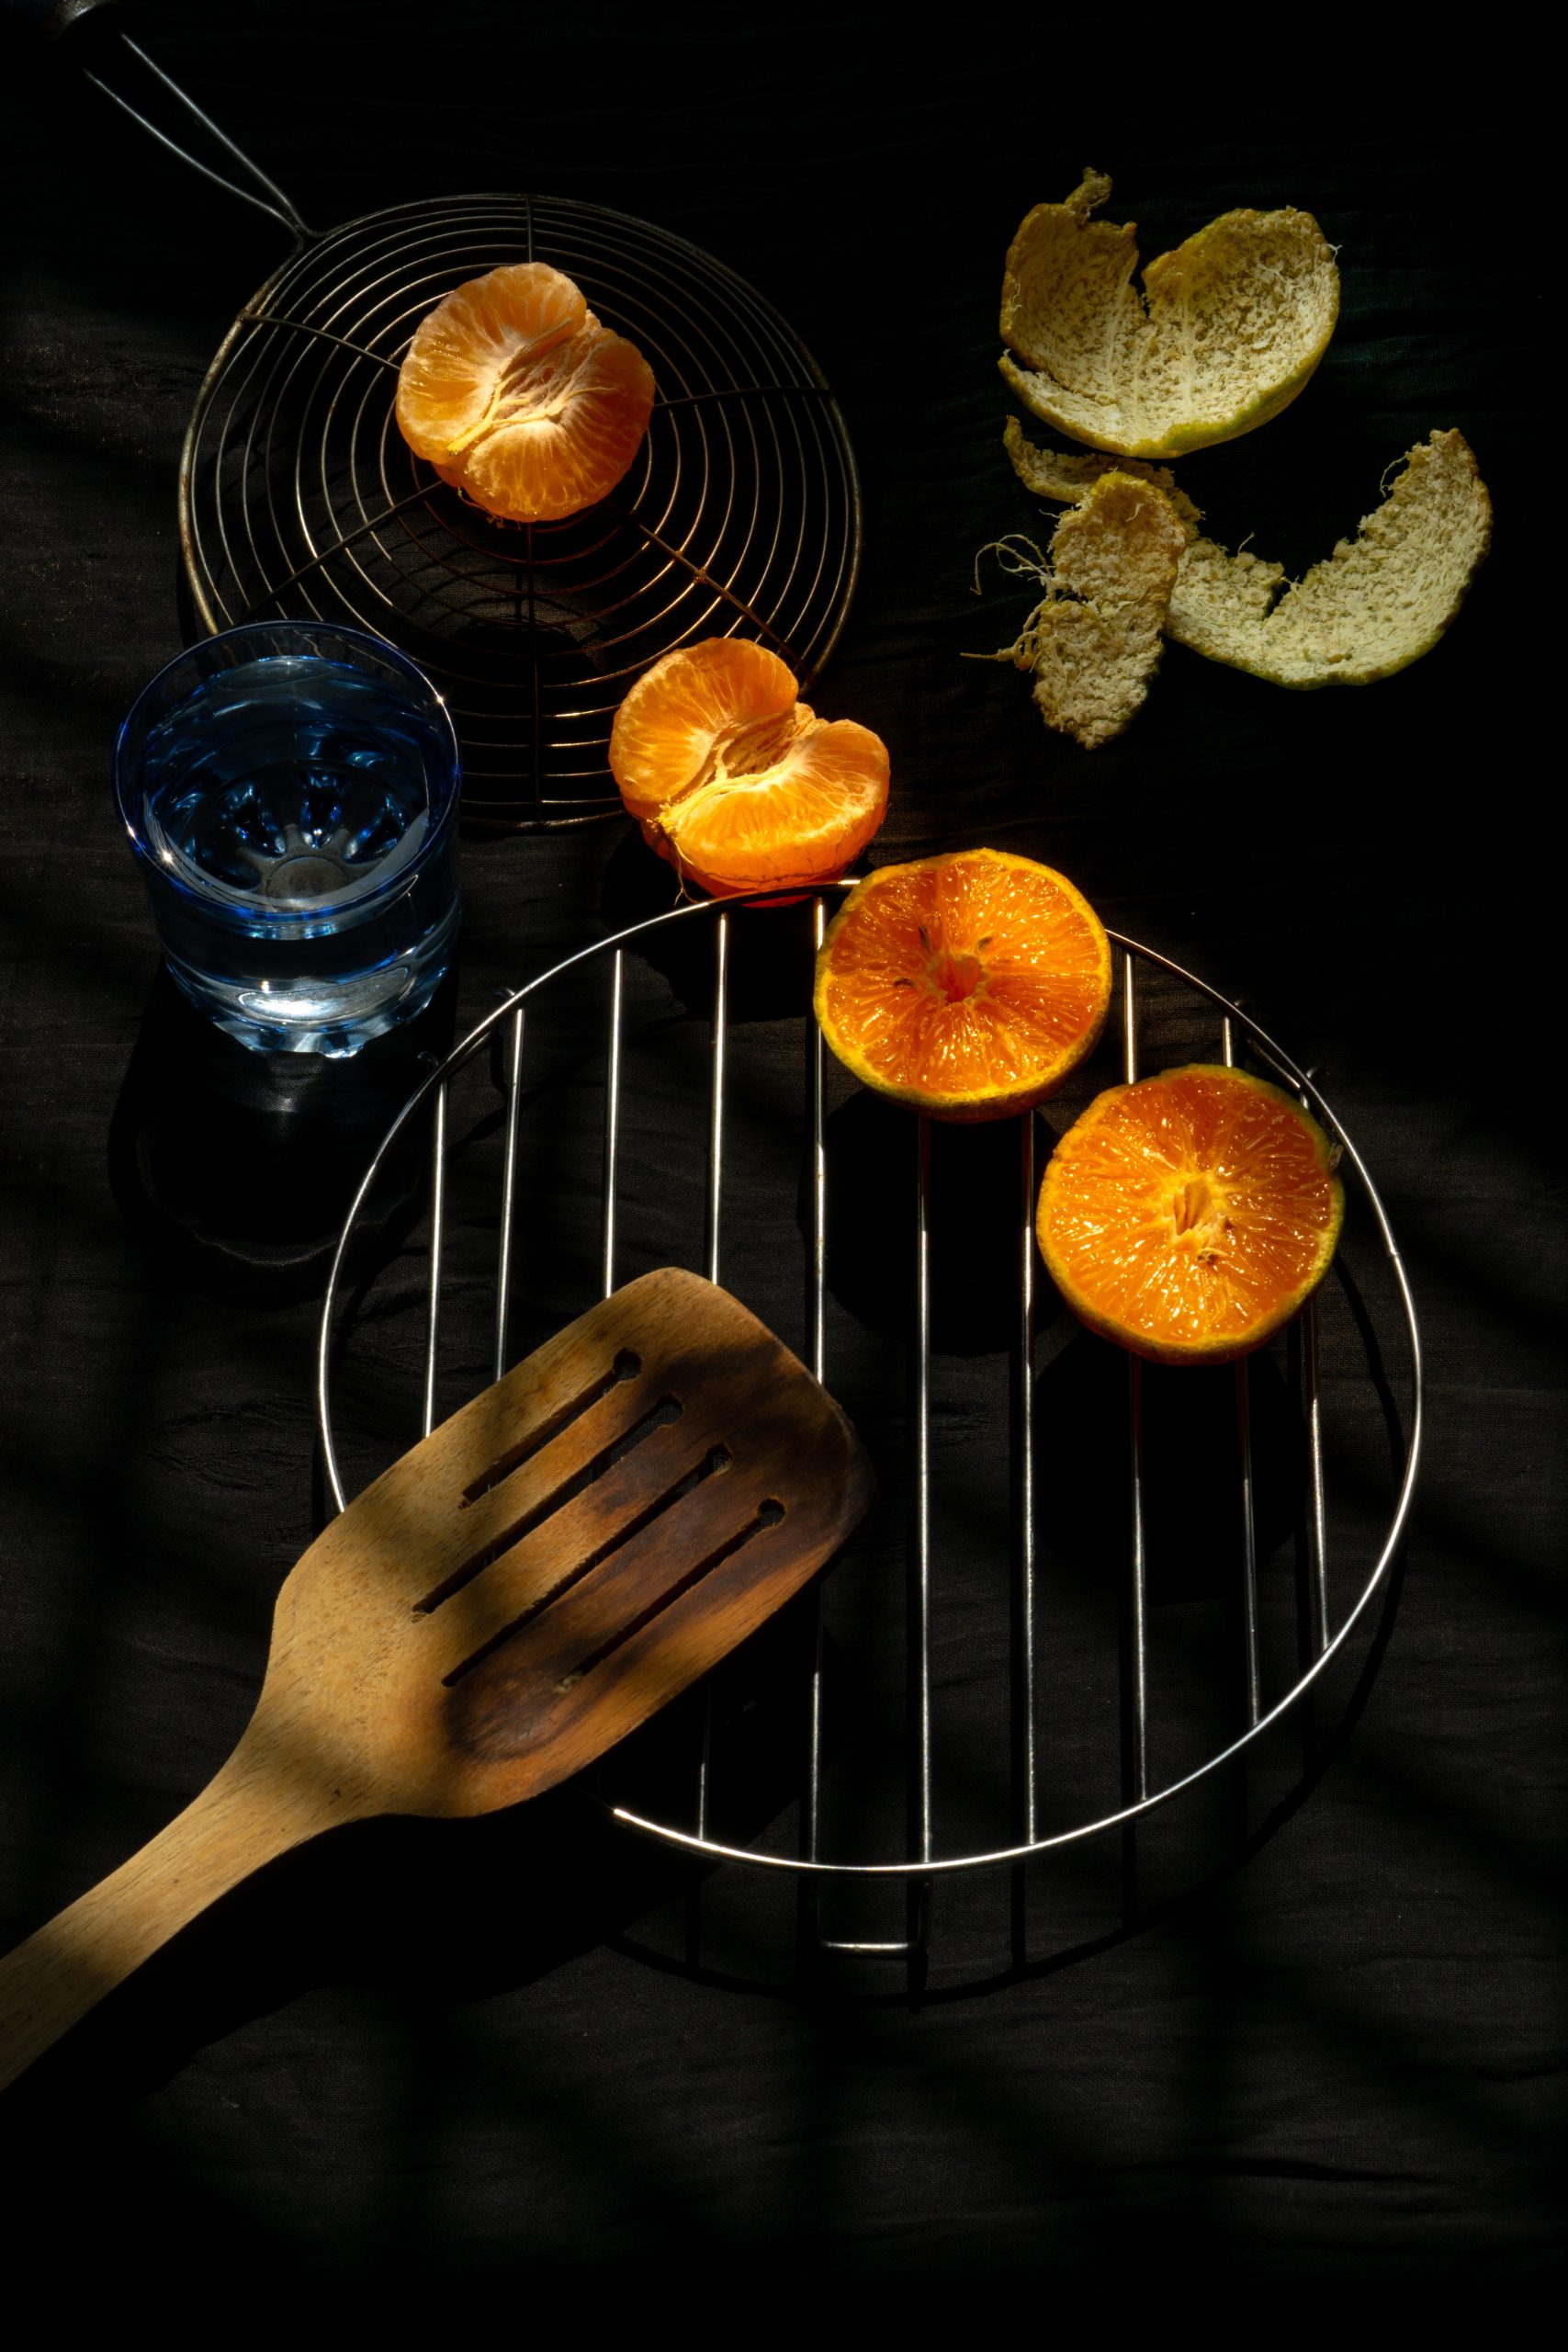 Peeled oranges